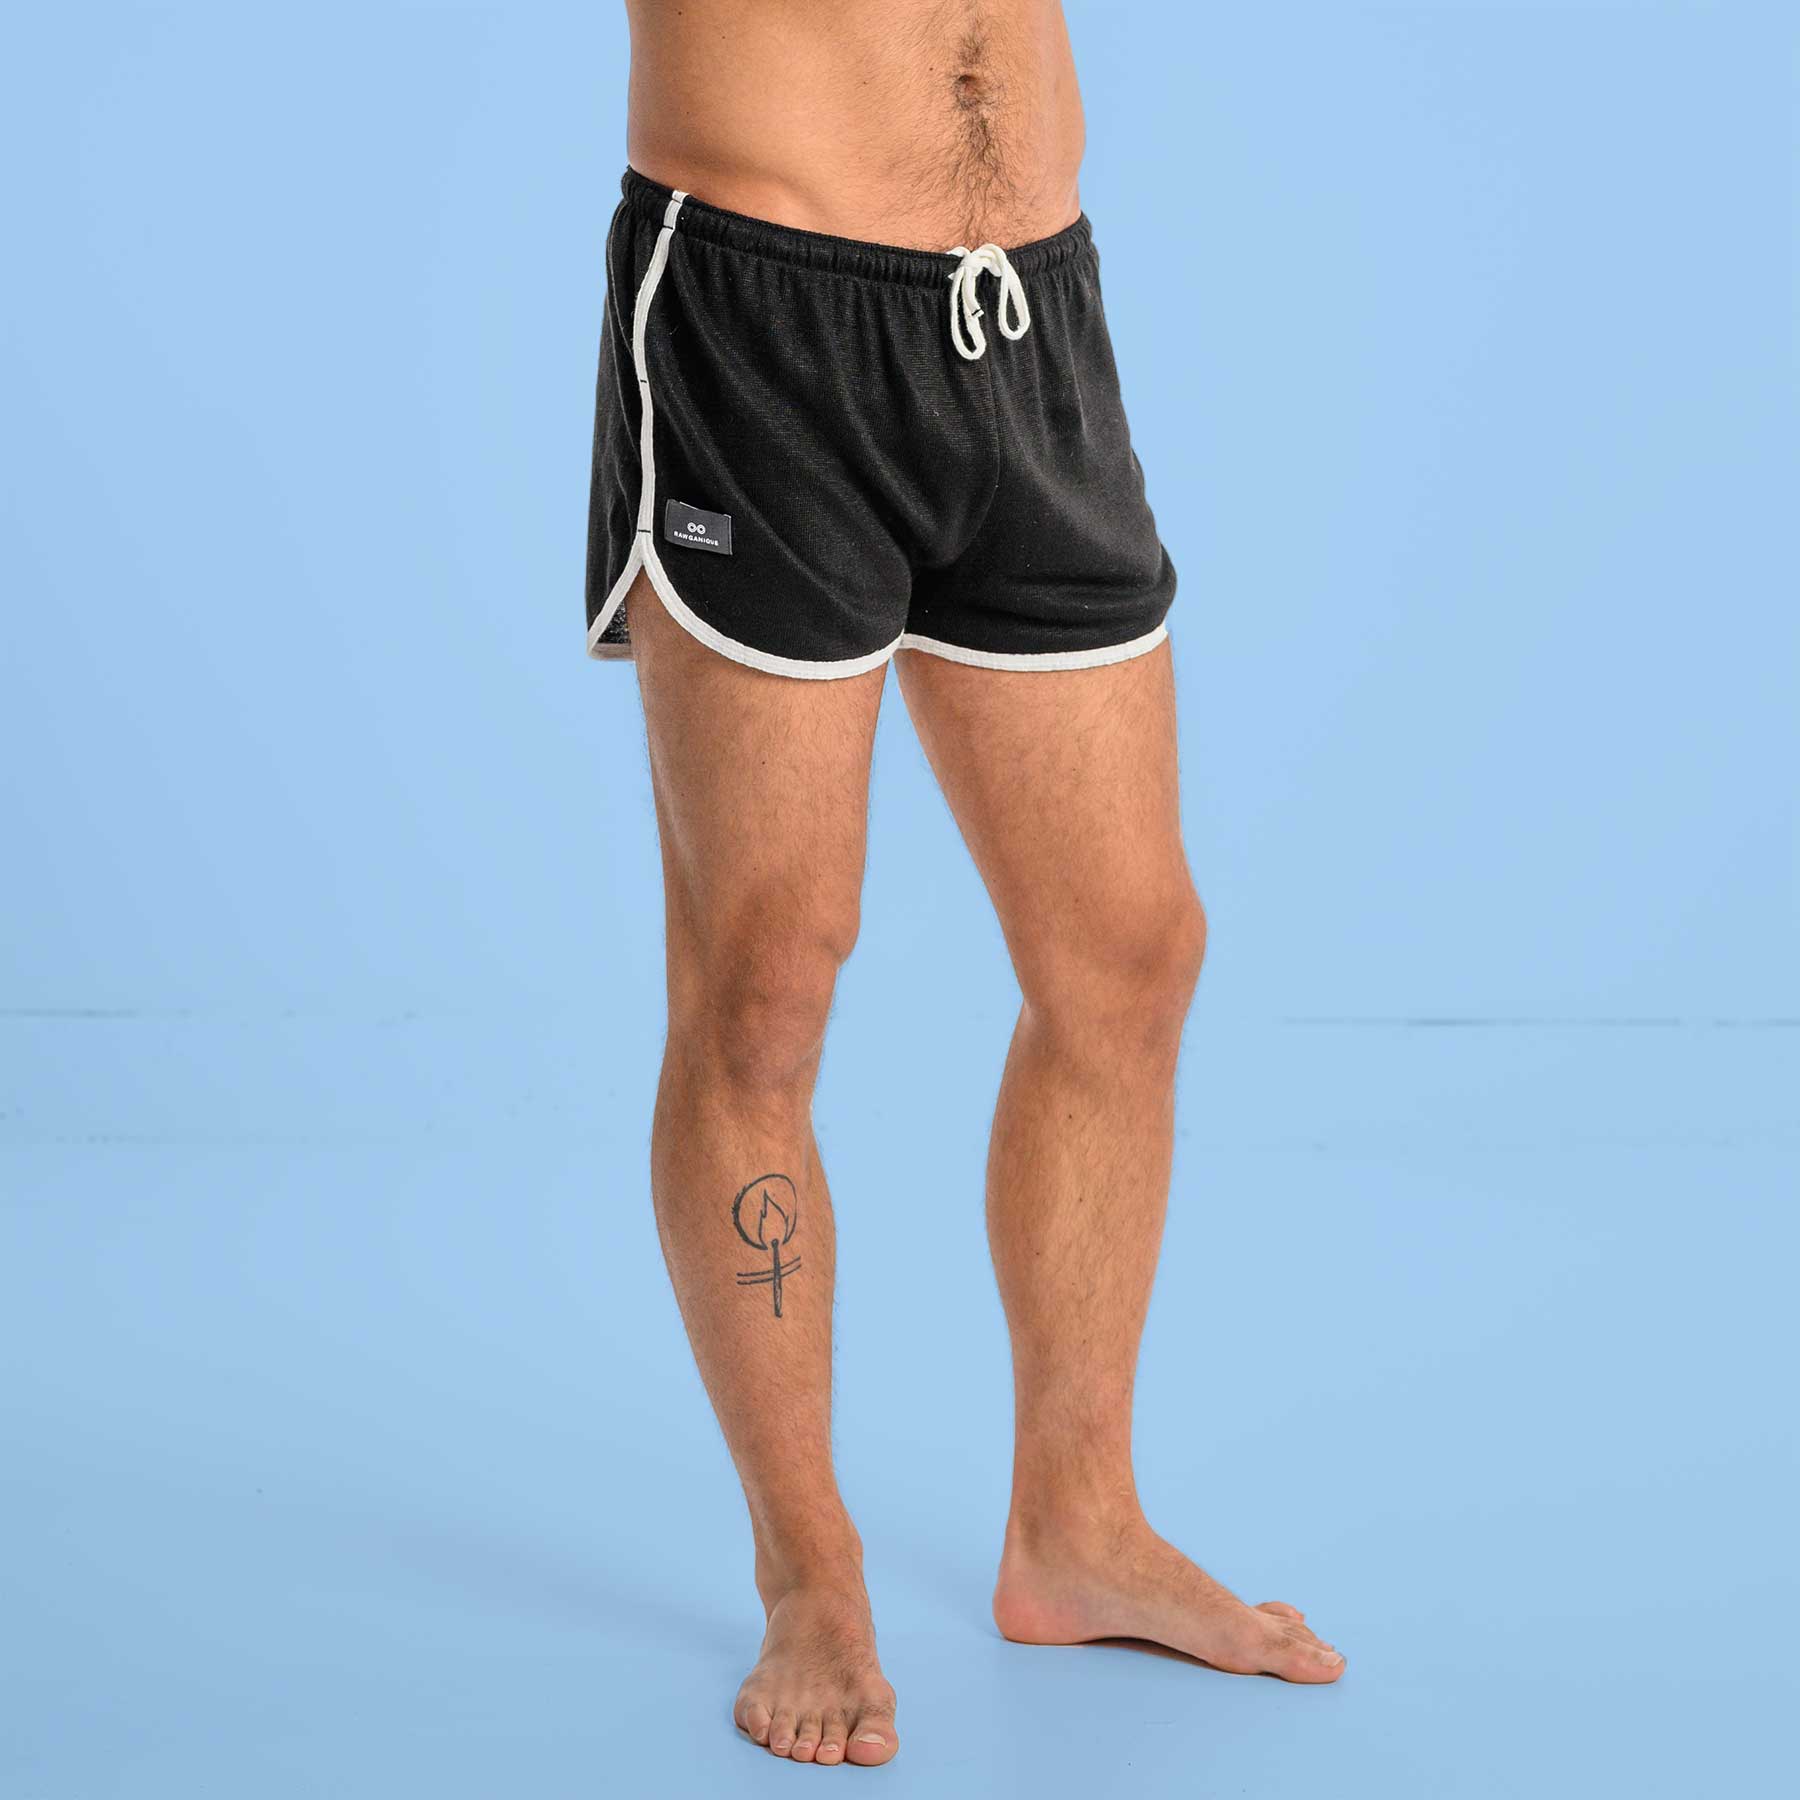 100% Organic Hemp Knit Running Shorts Gym Shorts (Single Layer